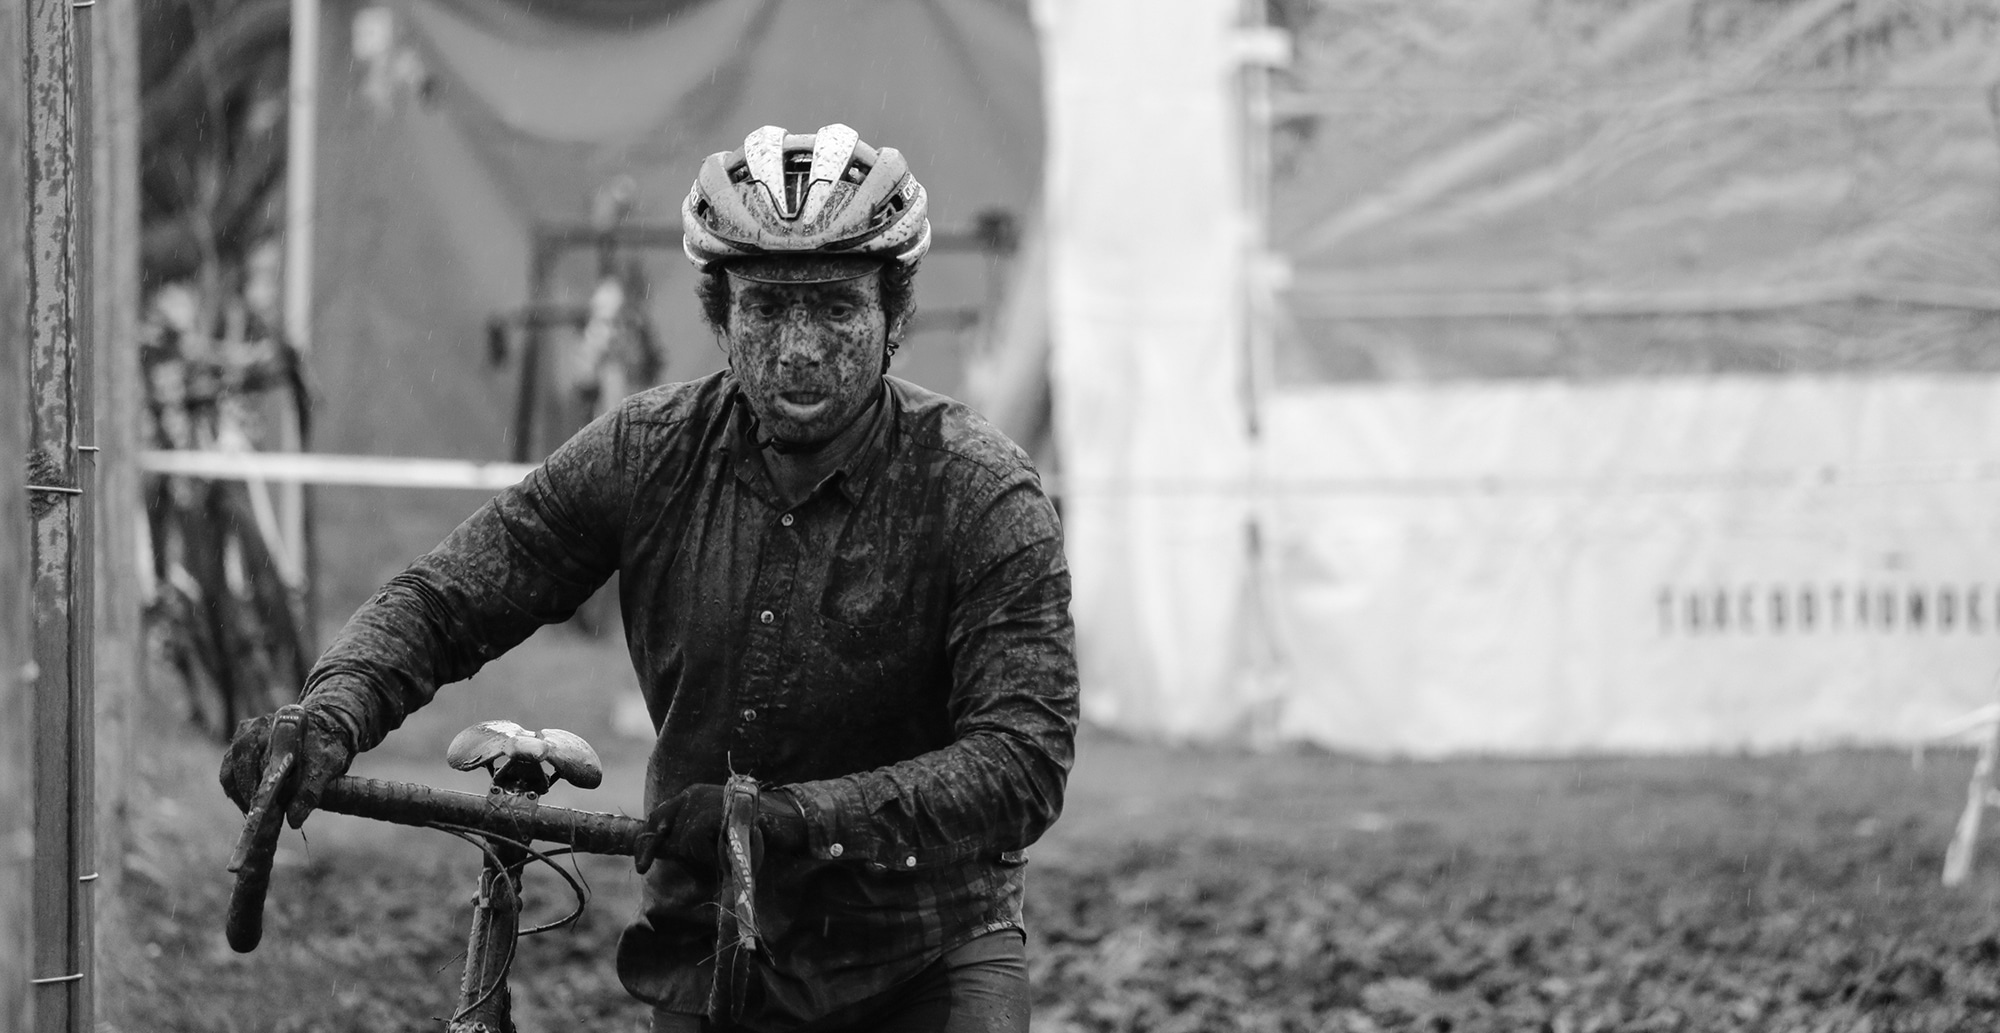 Muddy rider with cyclocross bike